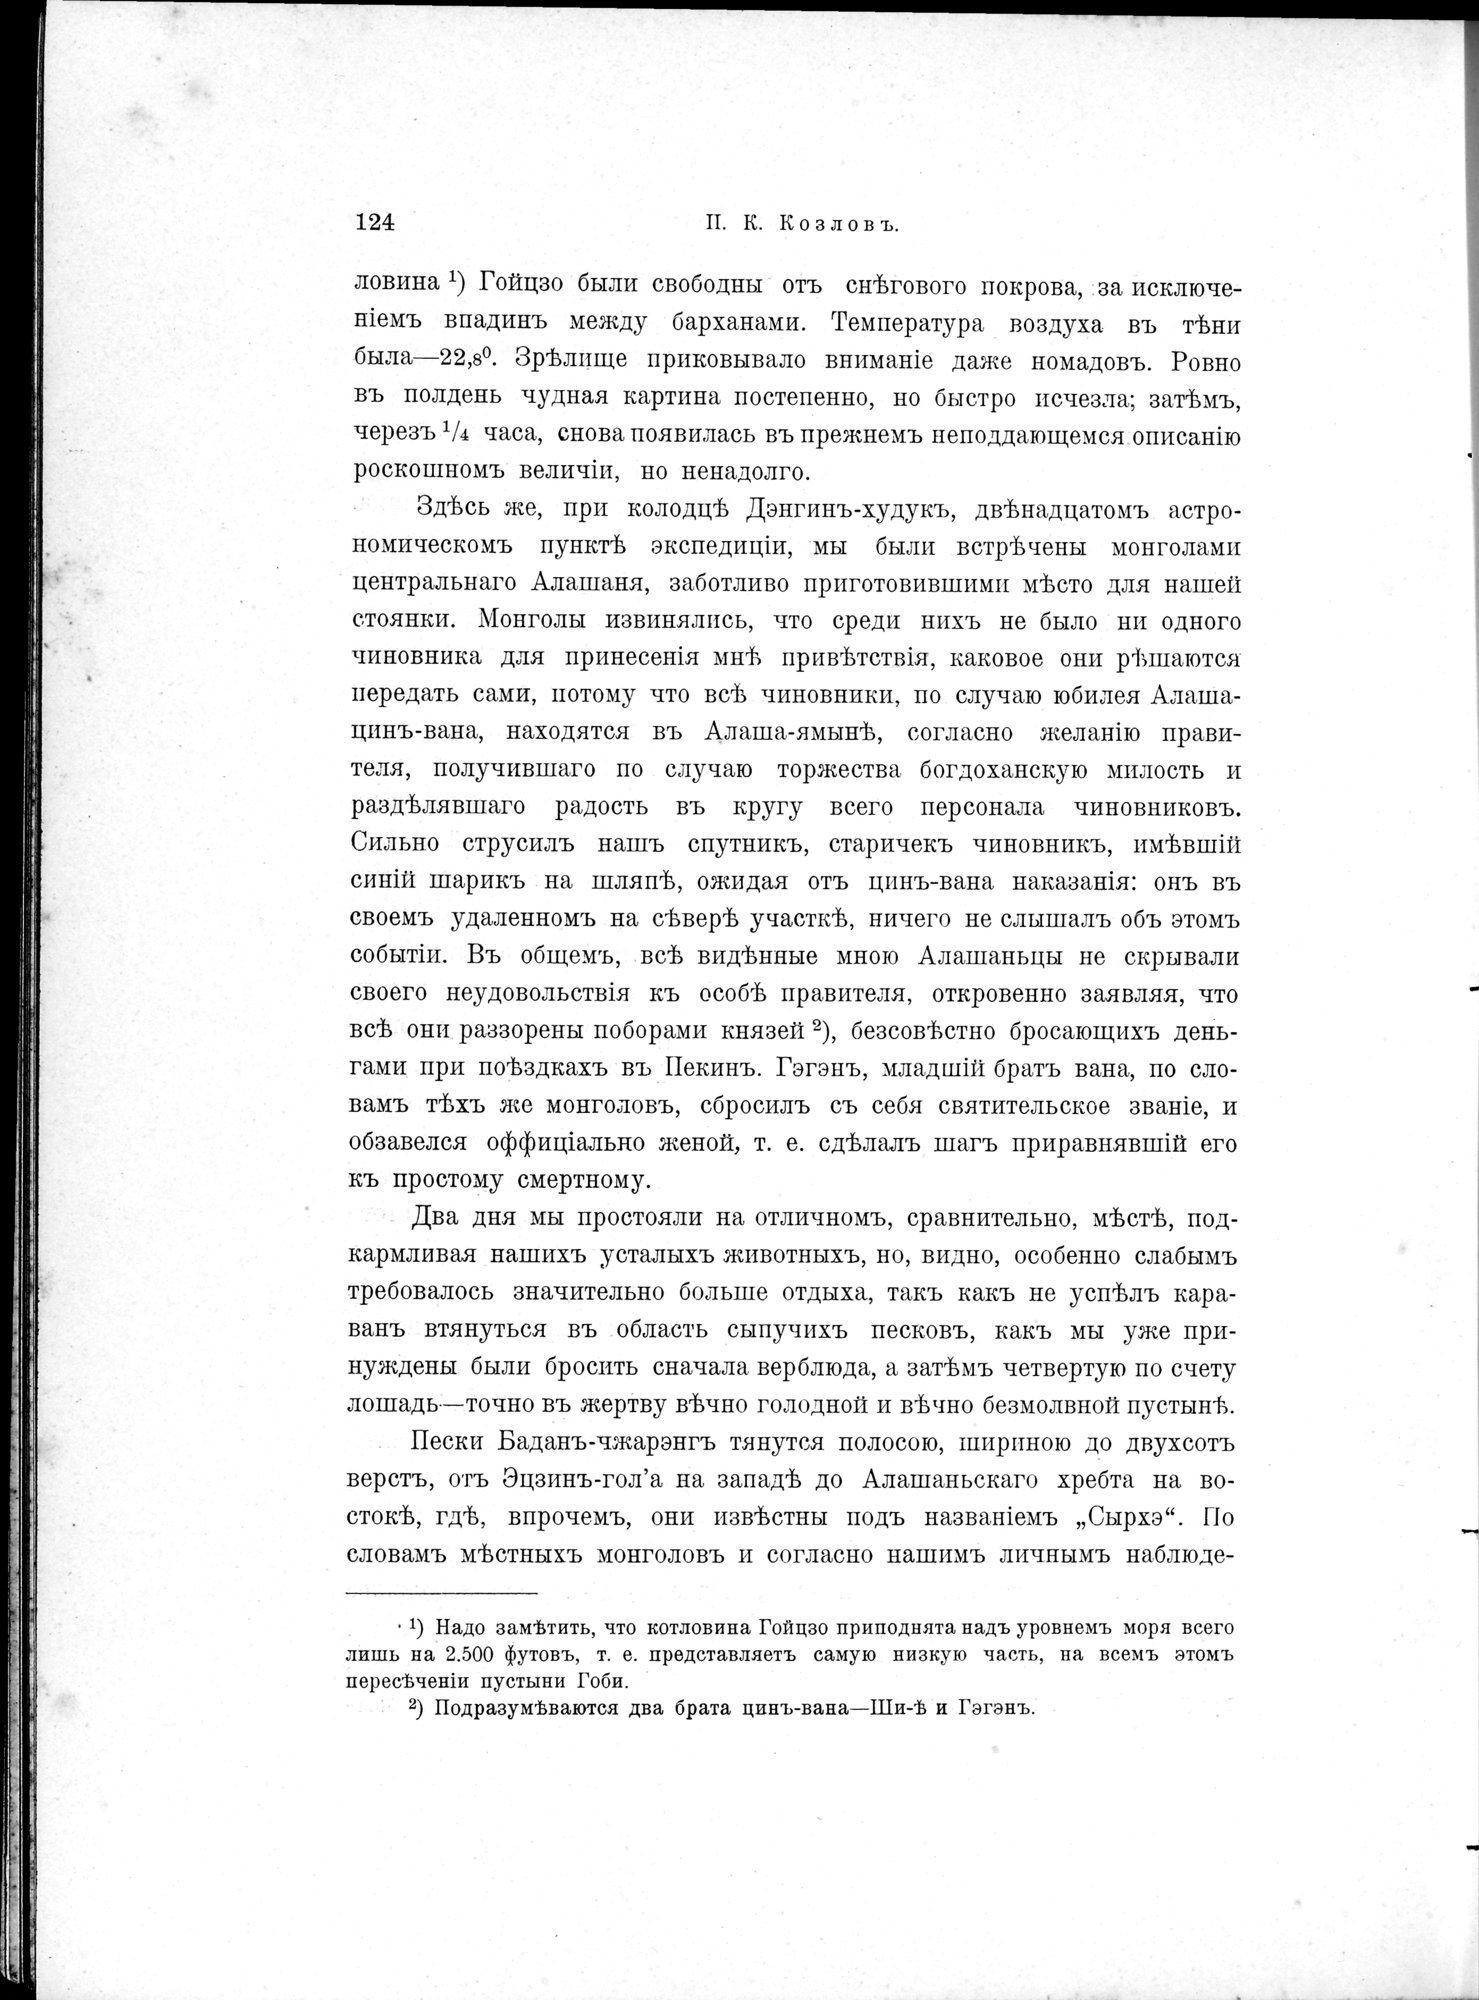 Mongoliia i Kam : vol.1 / Page 158 (Grayscale High Resolution Image)